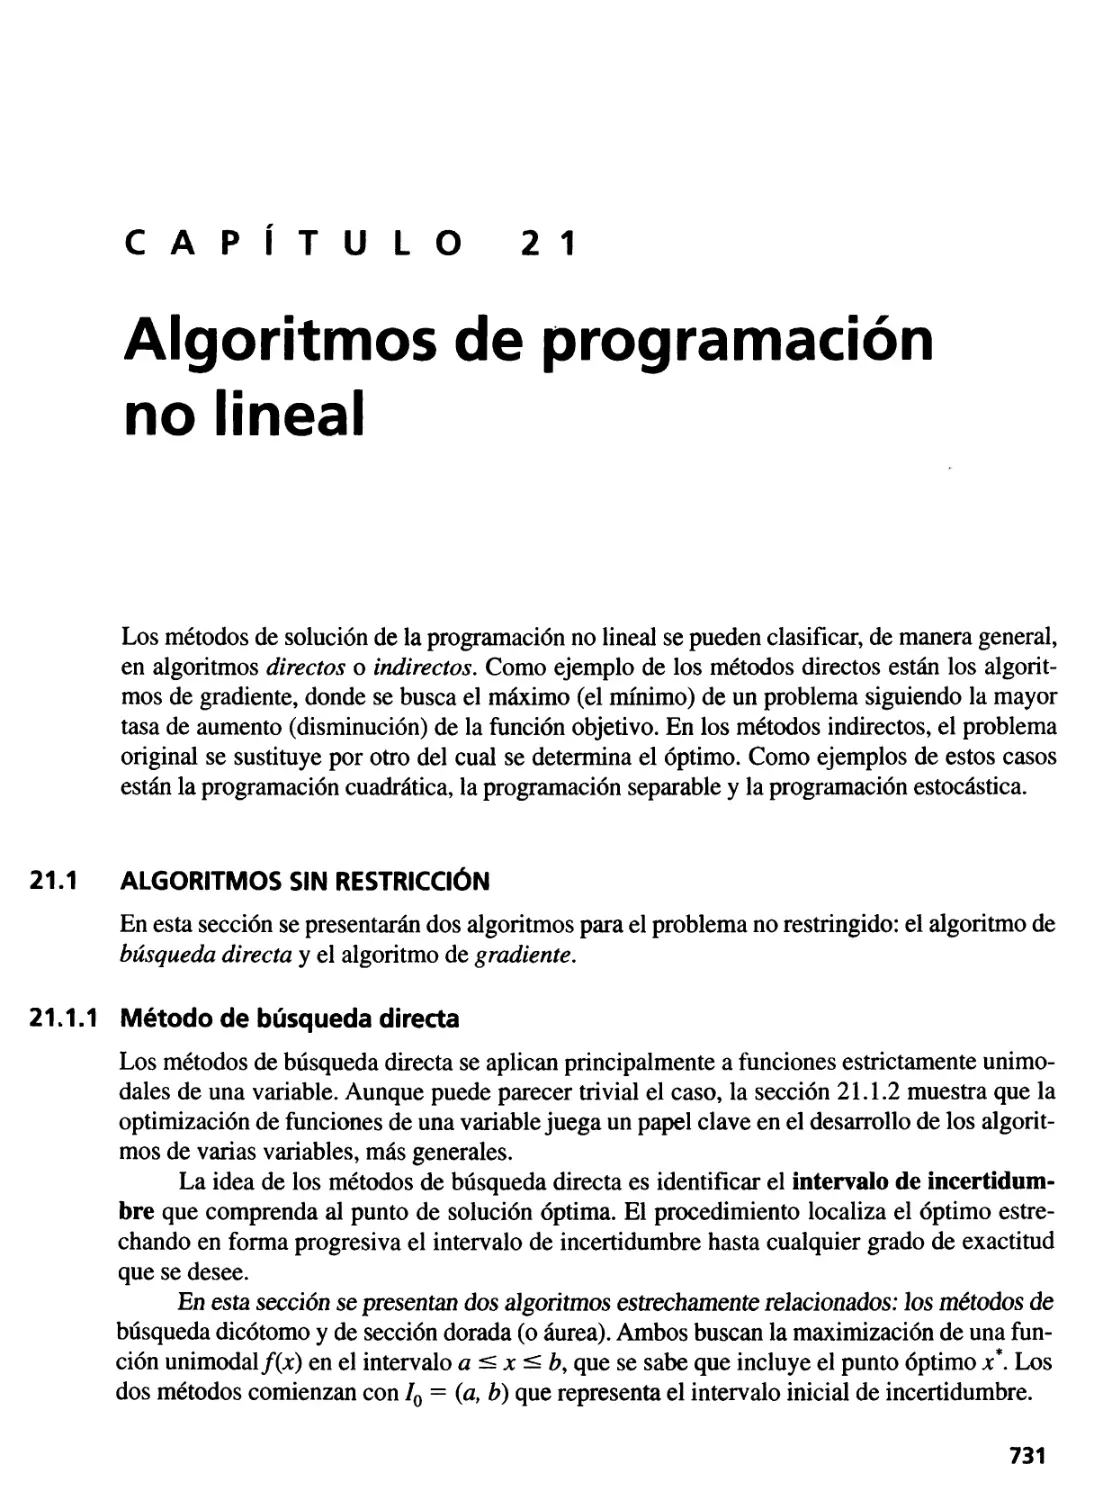 21. Algoritmos de programación no lineal